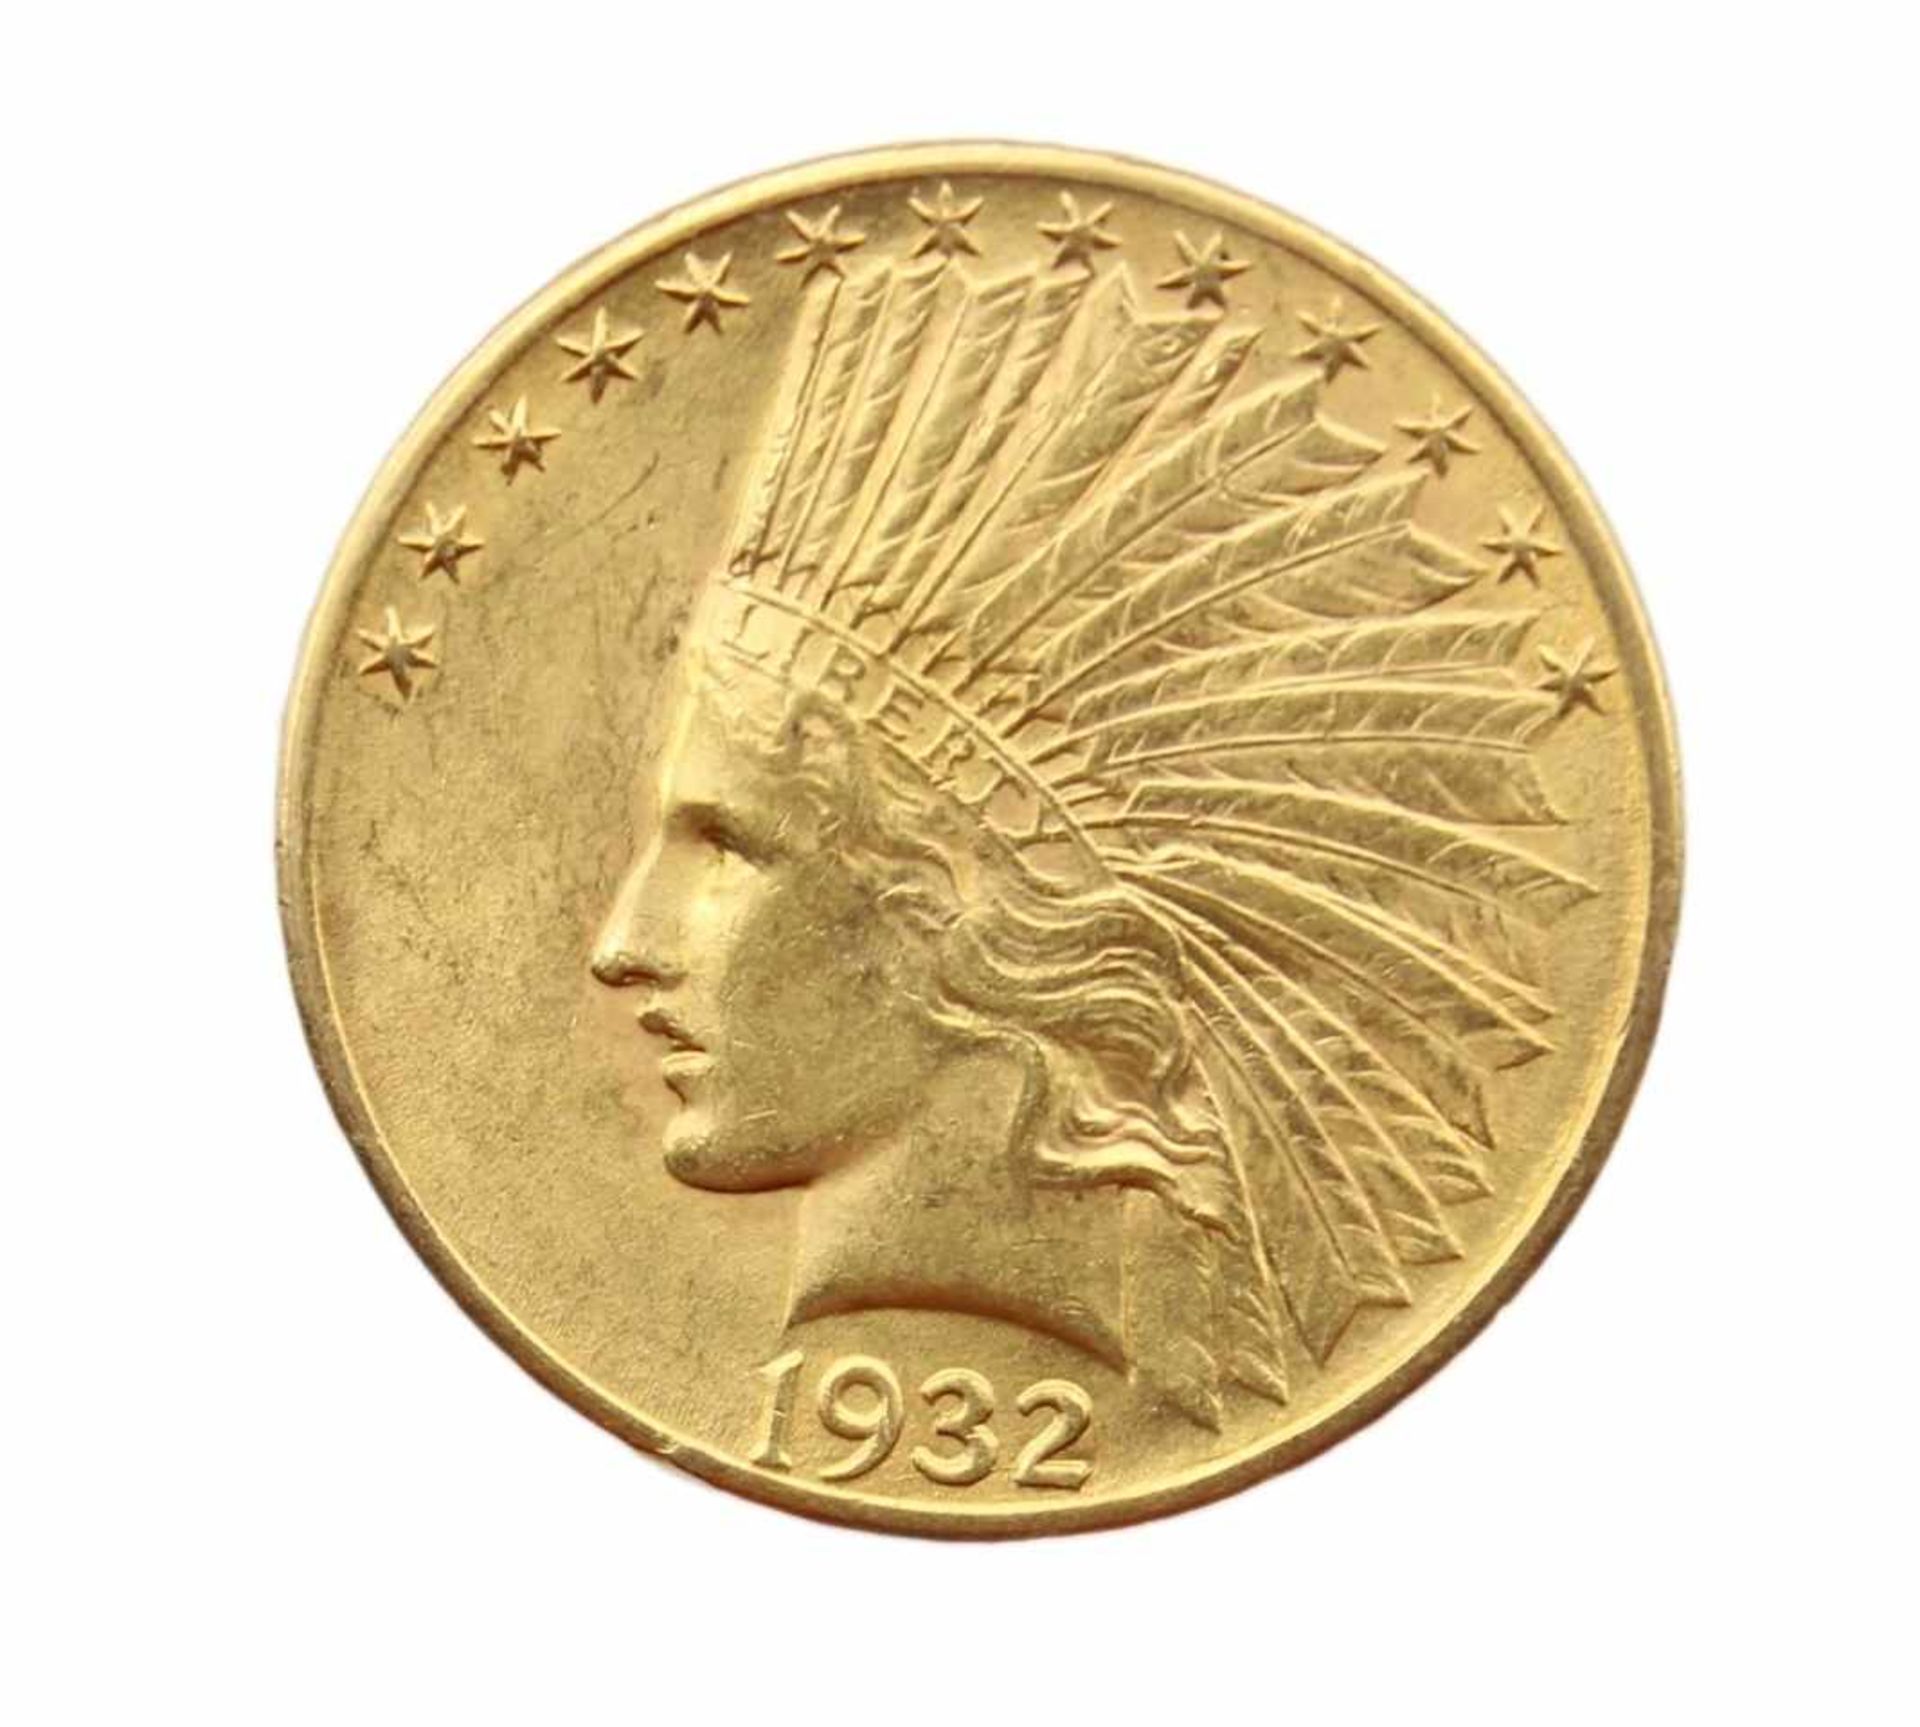 Goldmünze - United States of America 10 Dollars, 1932, d.= ca. 27 mm, ca. 16,7 Gramm- - -25.00 %